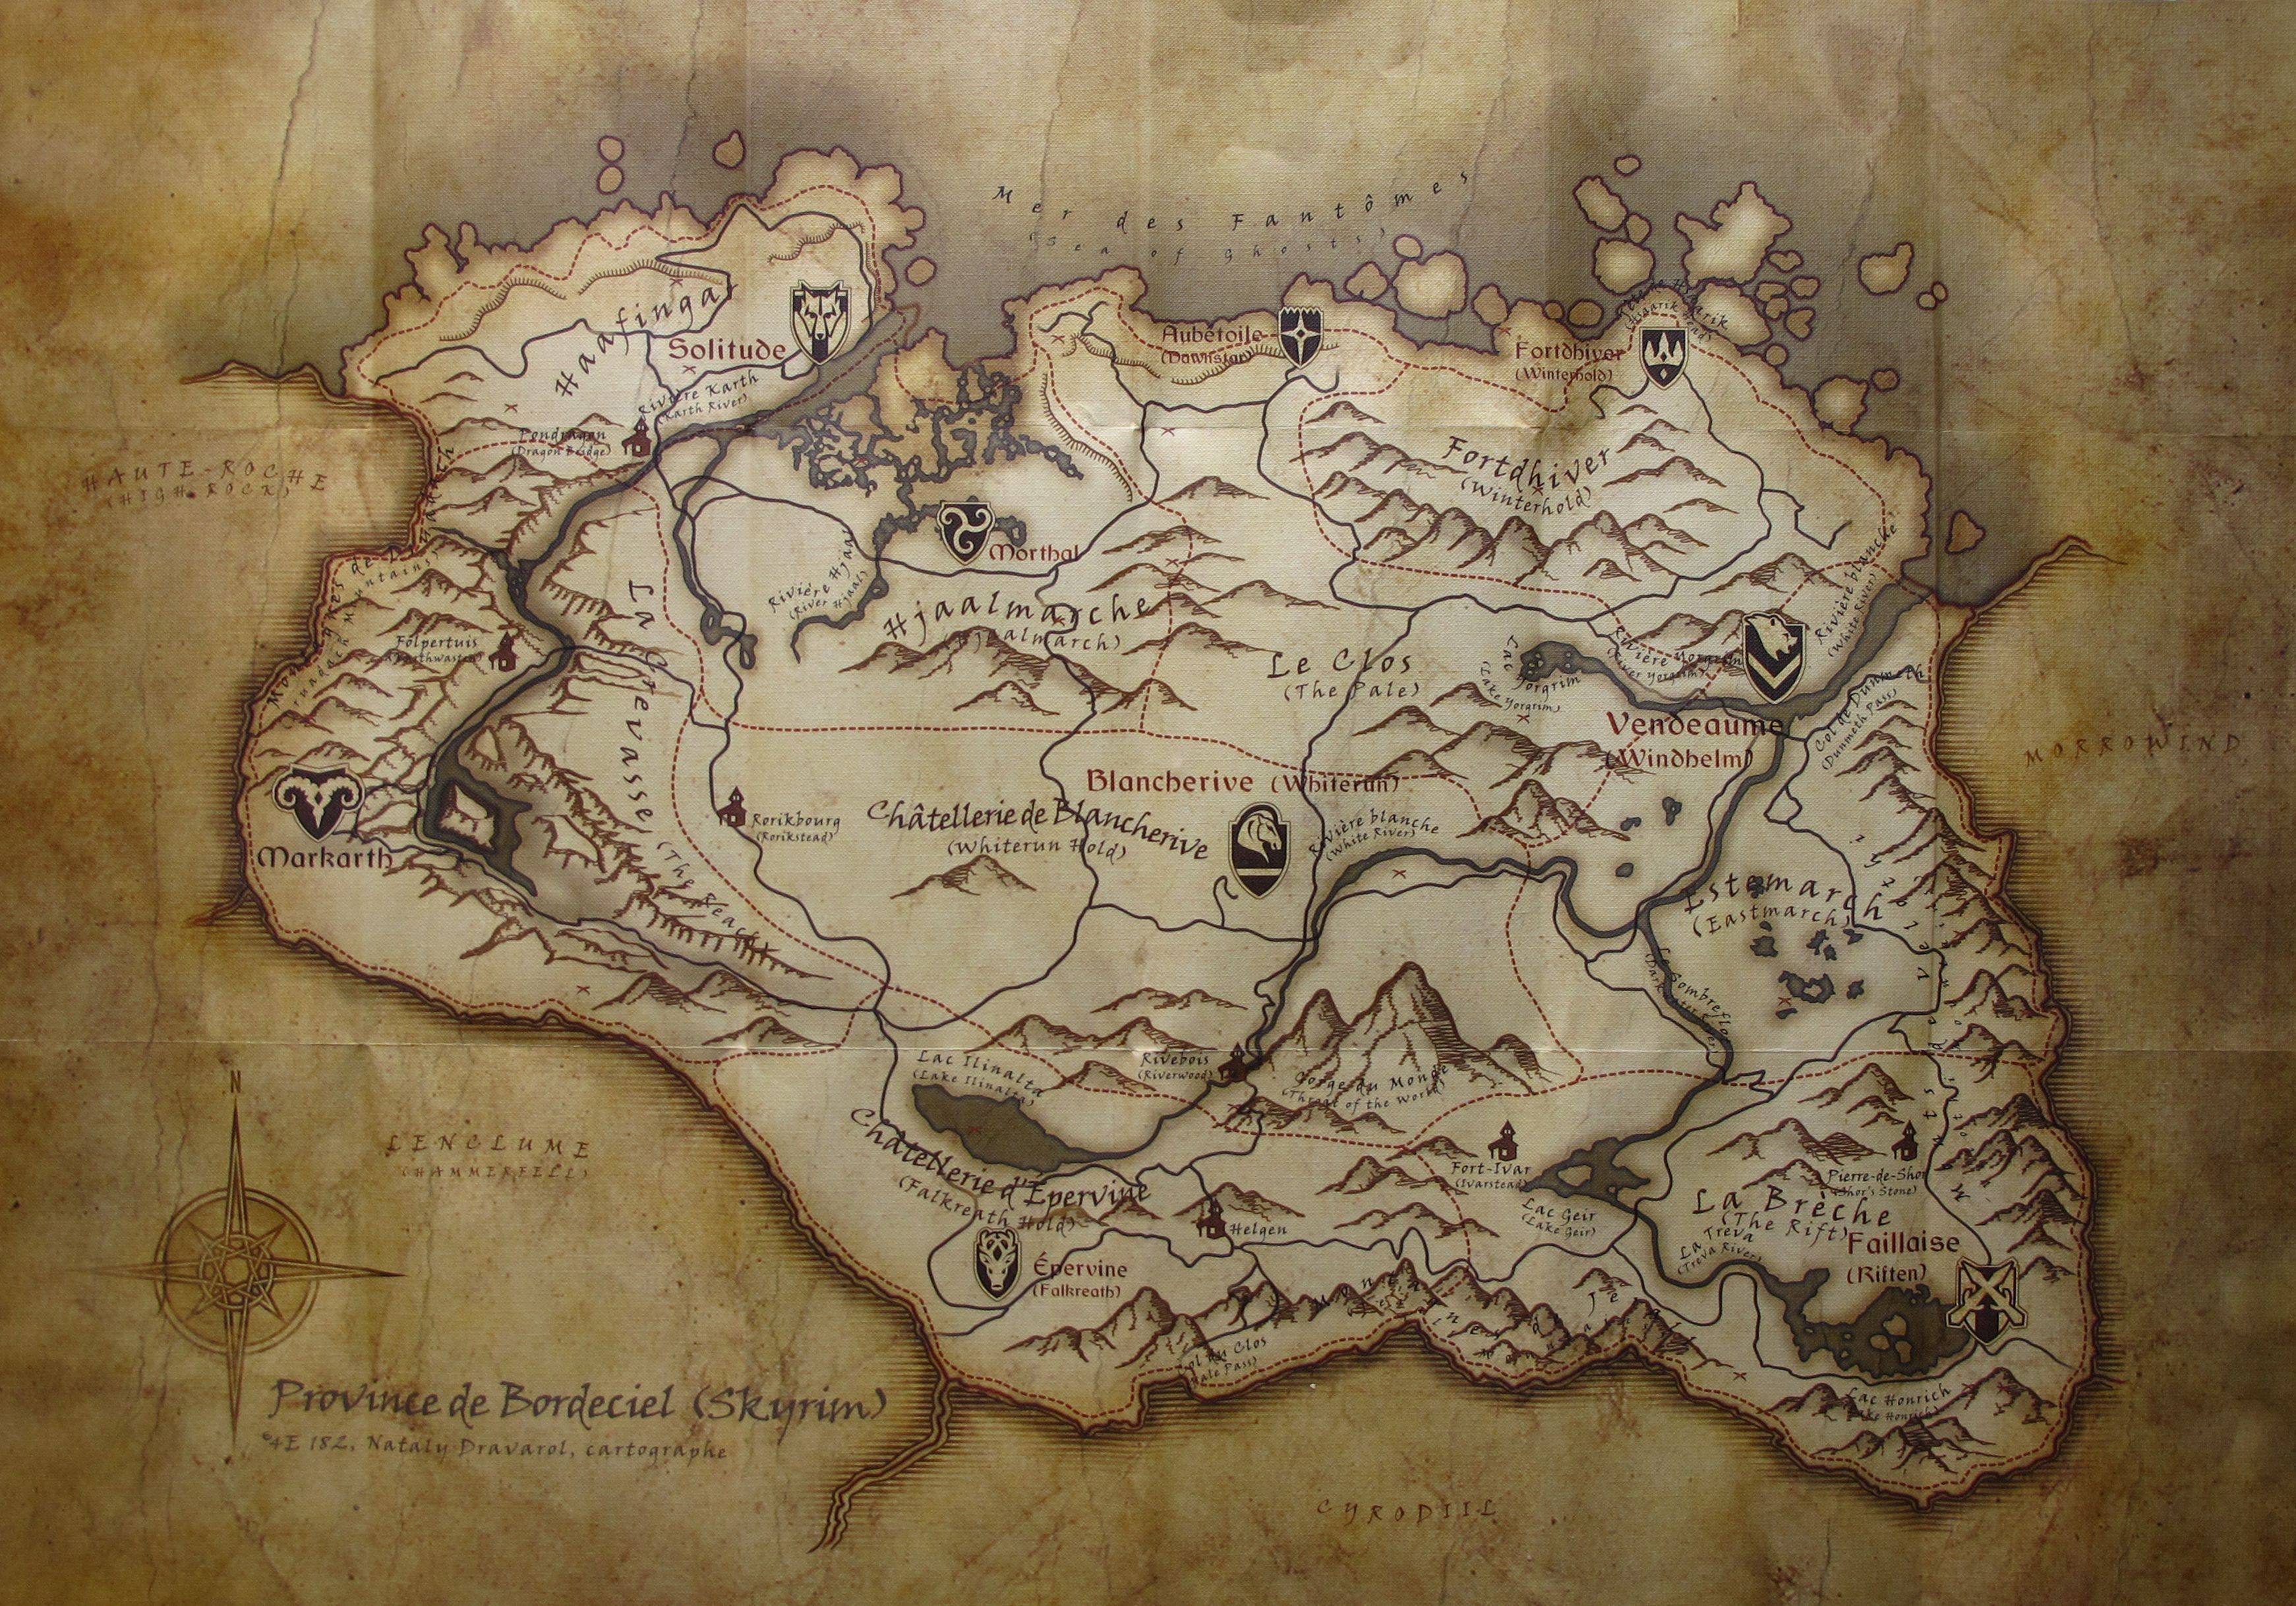 High Resolution Skyrim Map Wallpapers